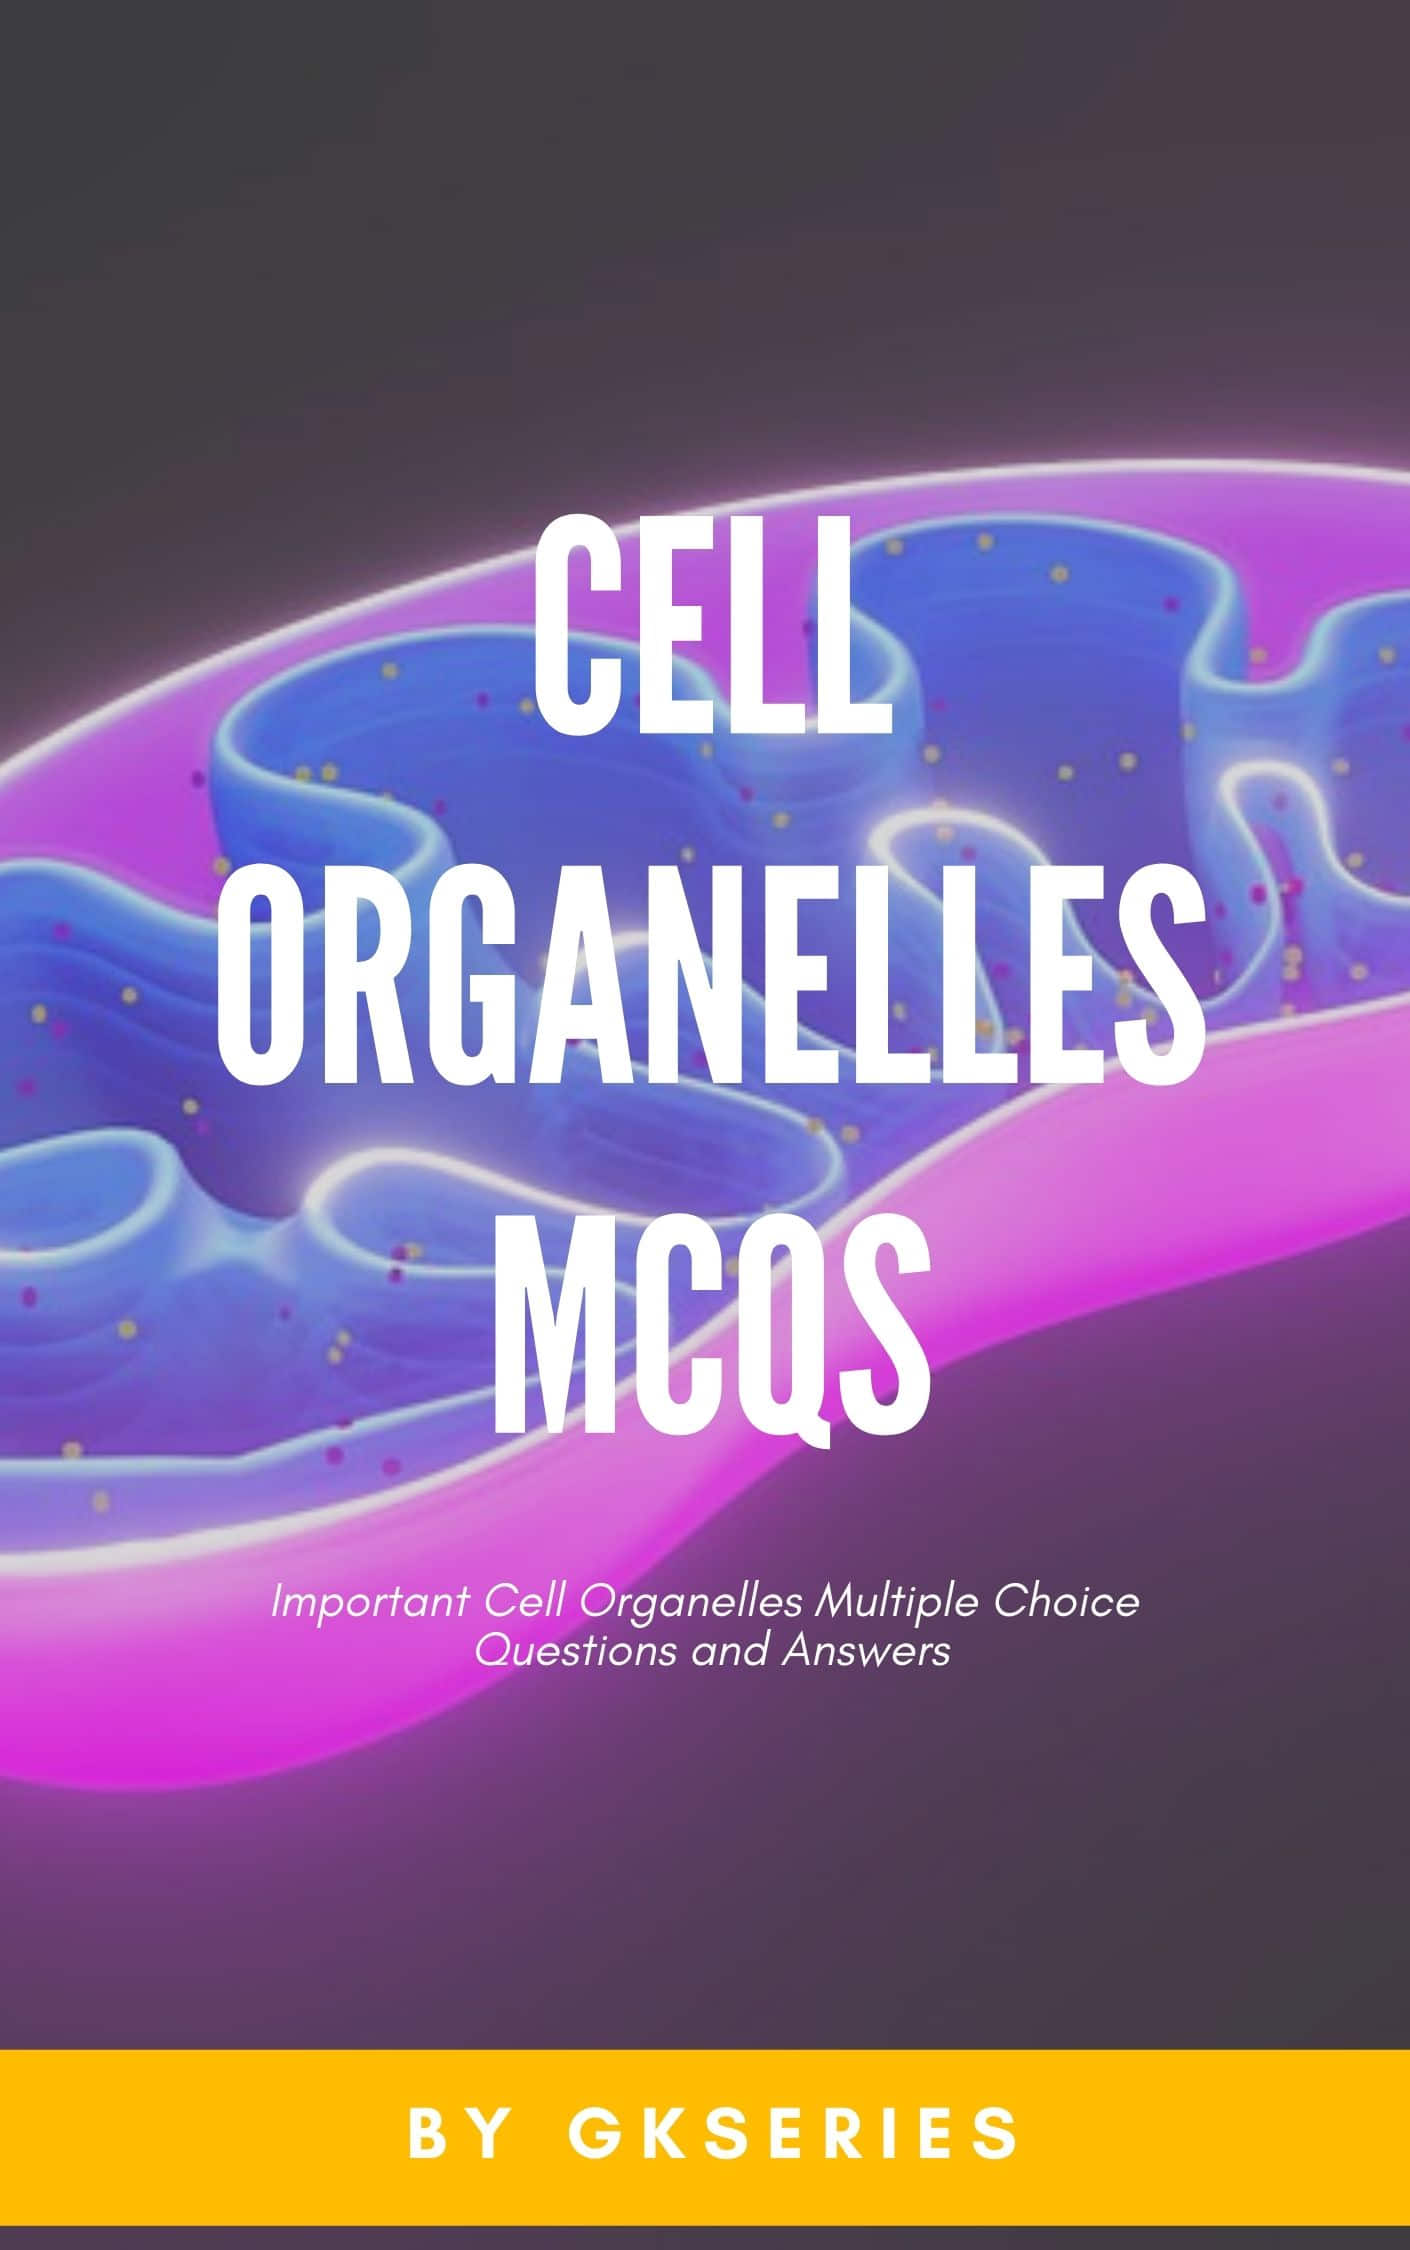 Cell Organelles mcqs pdf